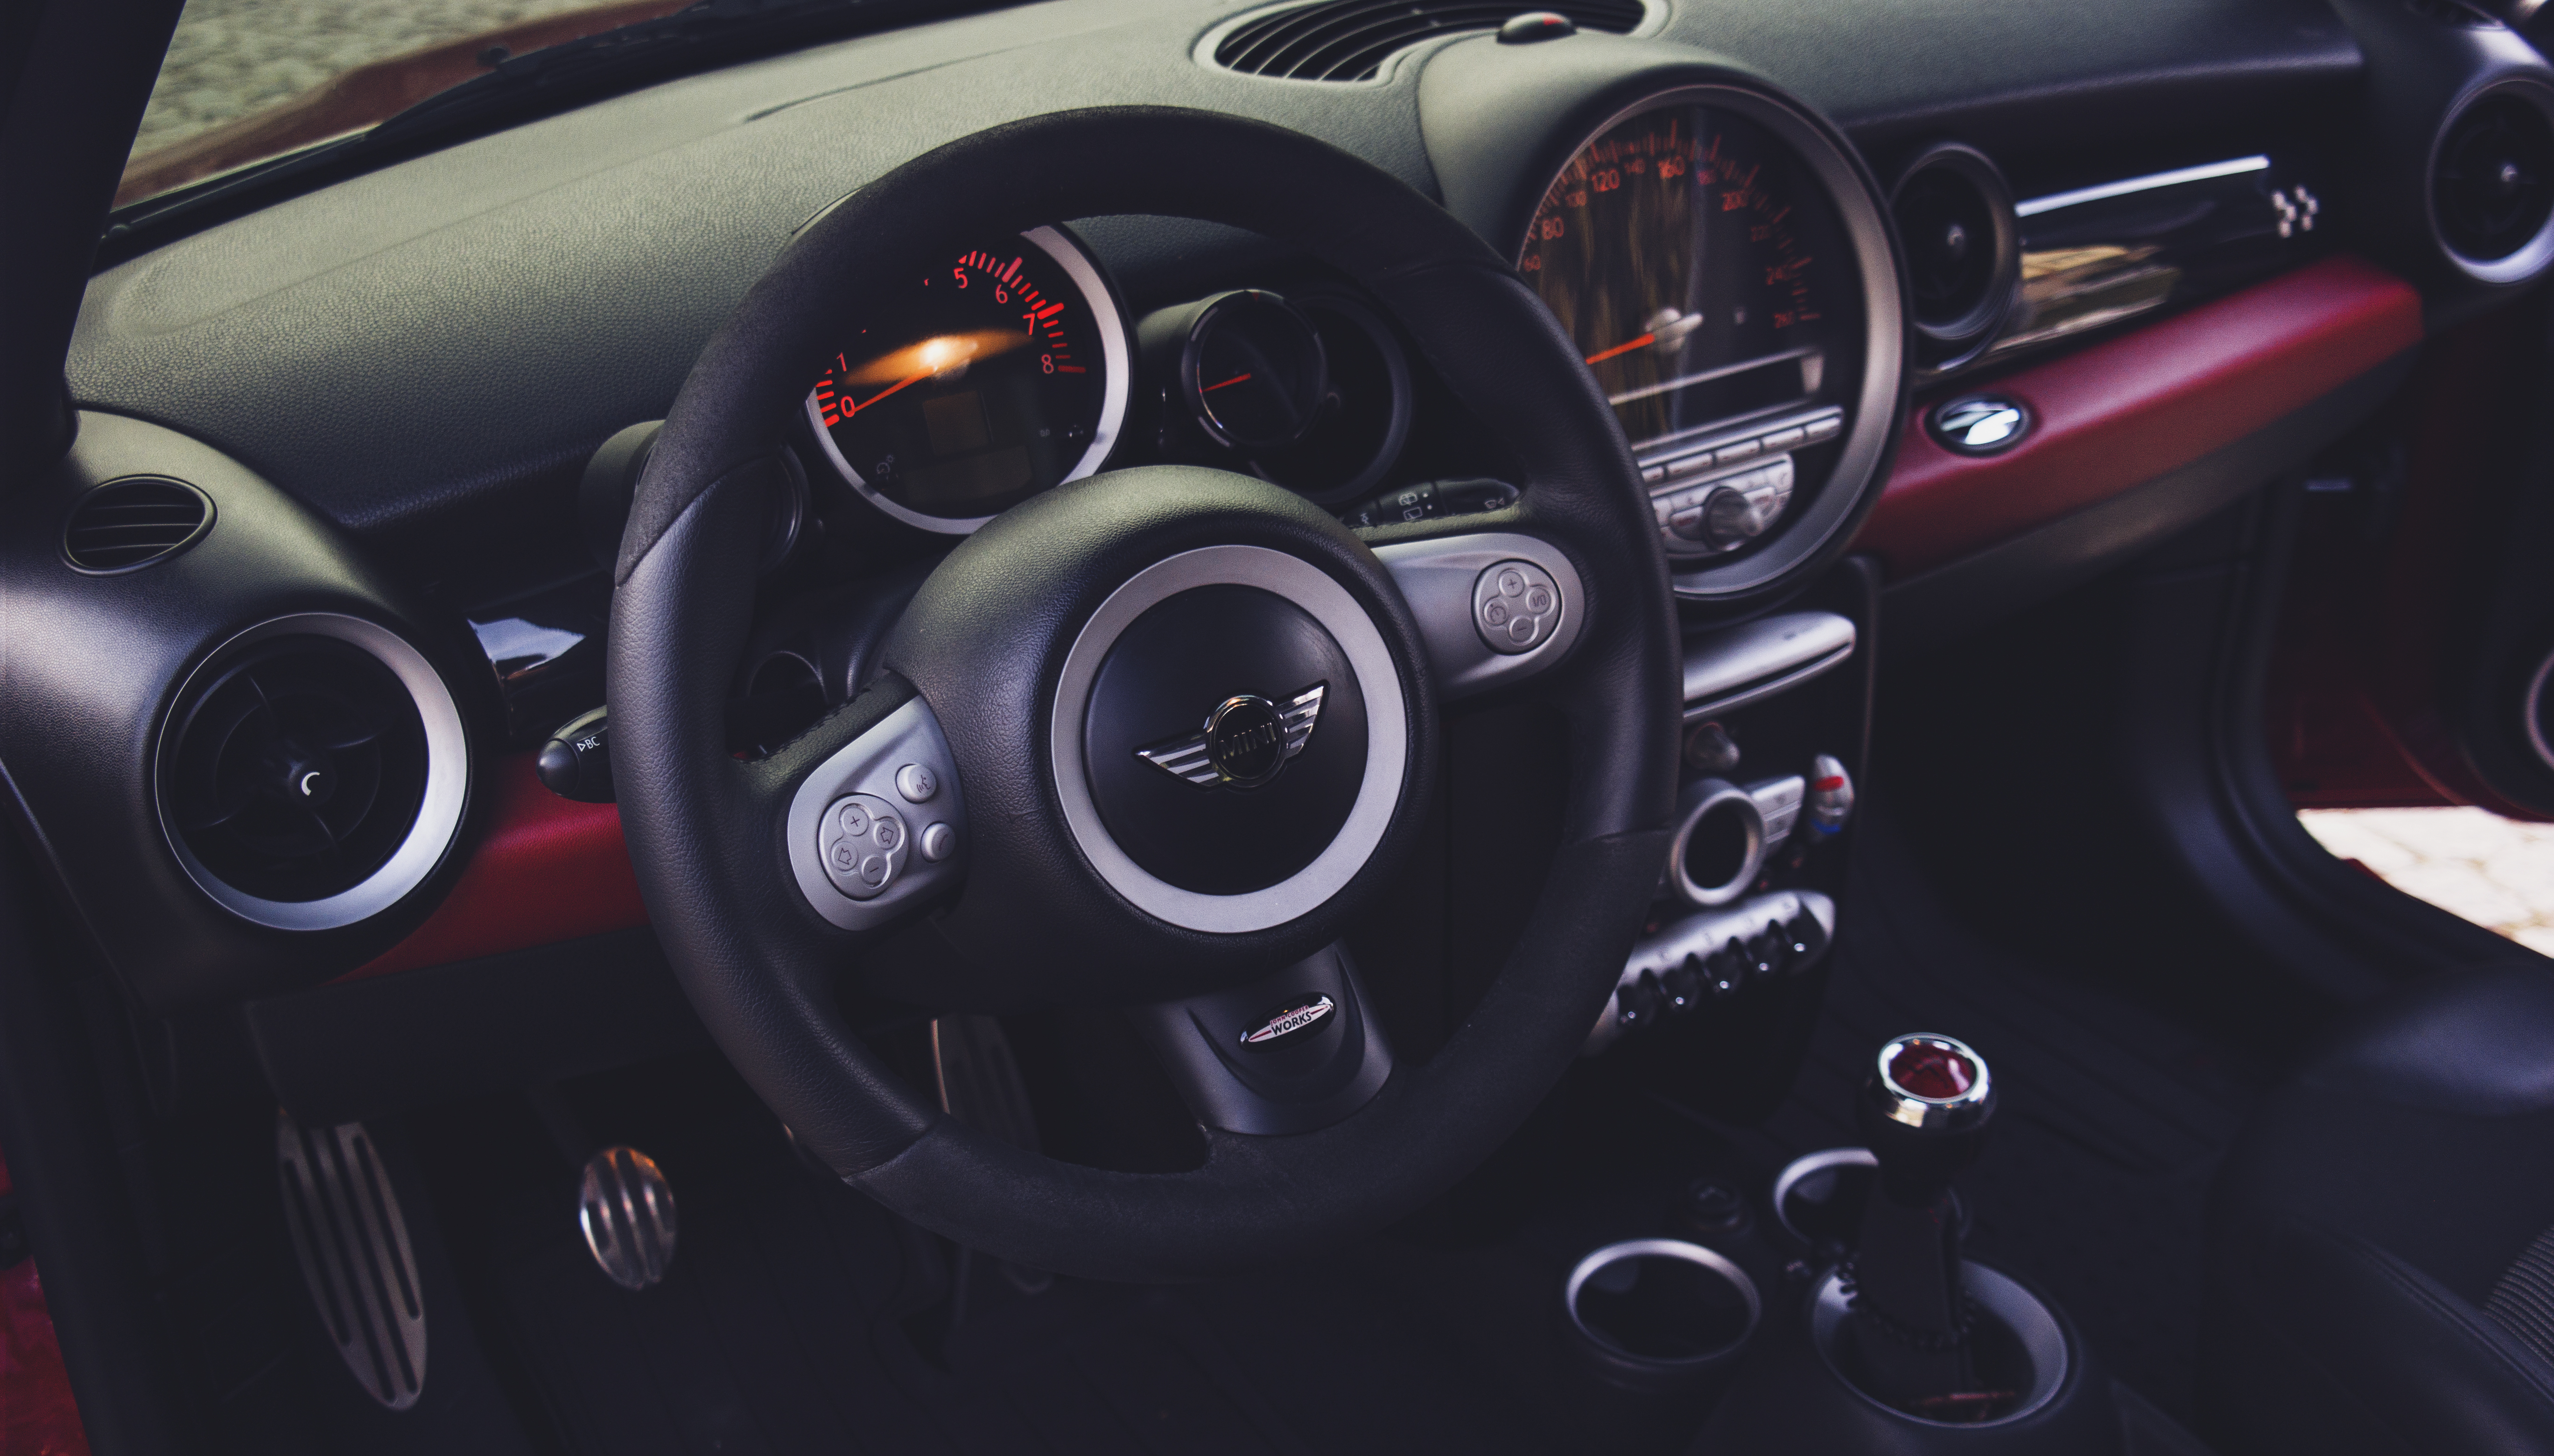 rudder, mini cooper, car interior, cars, steering wheel, vehicle interior cellphone